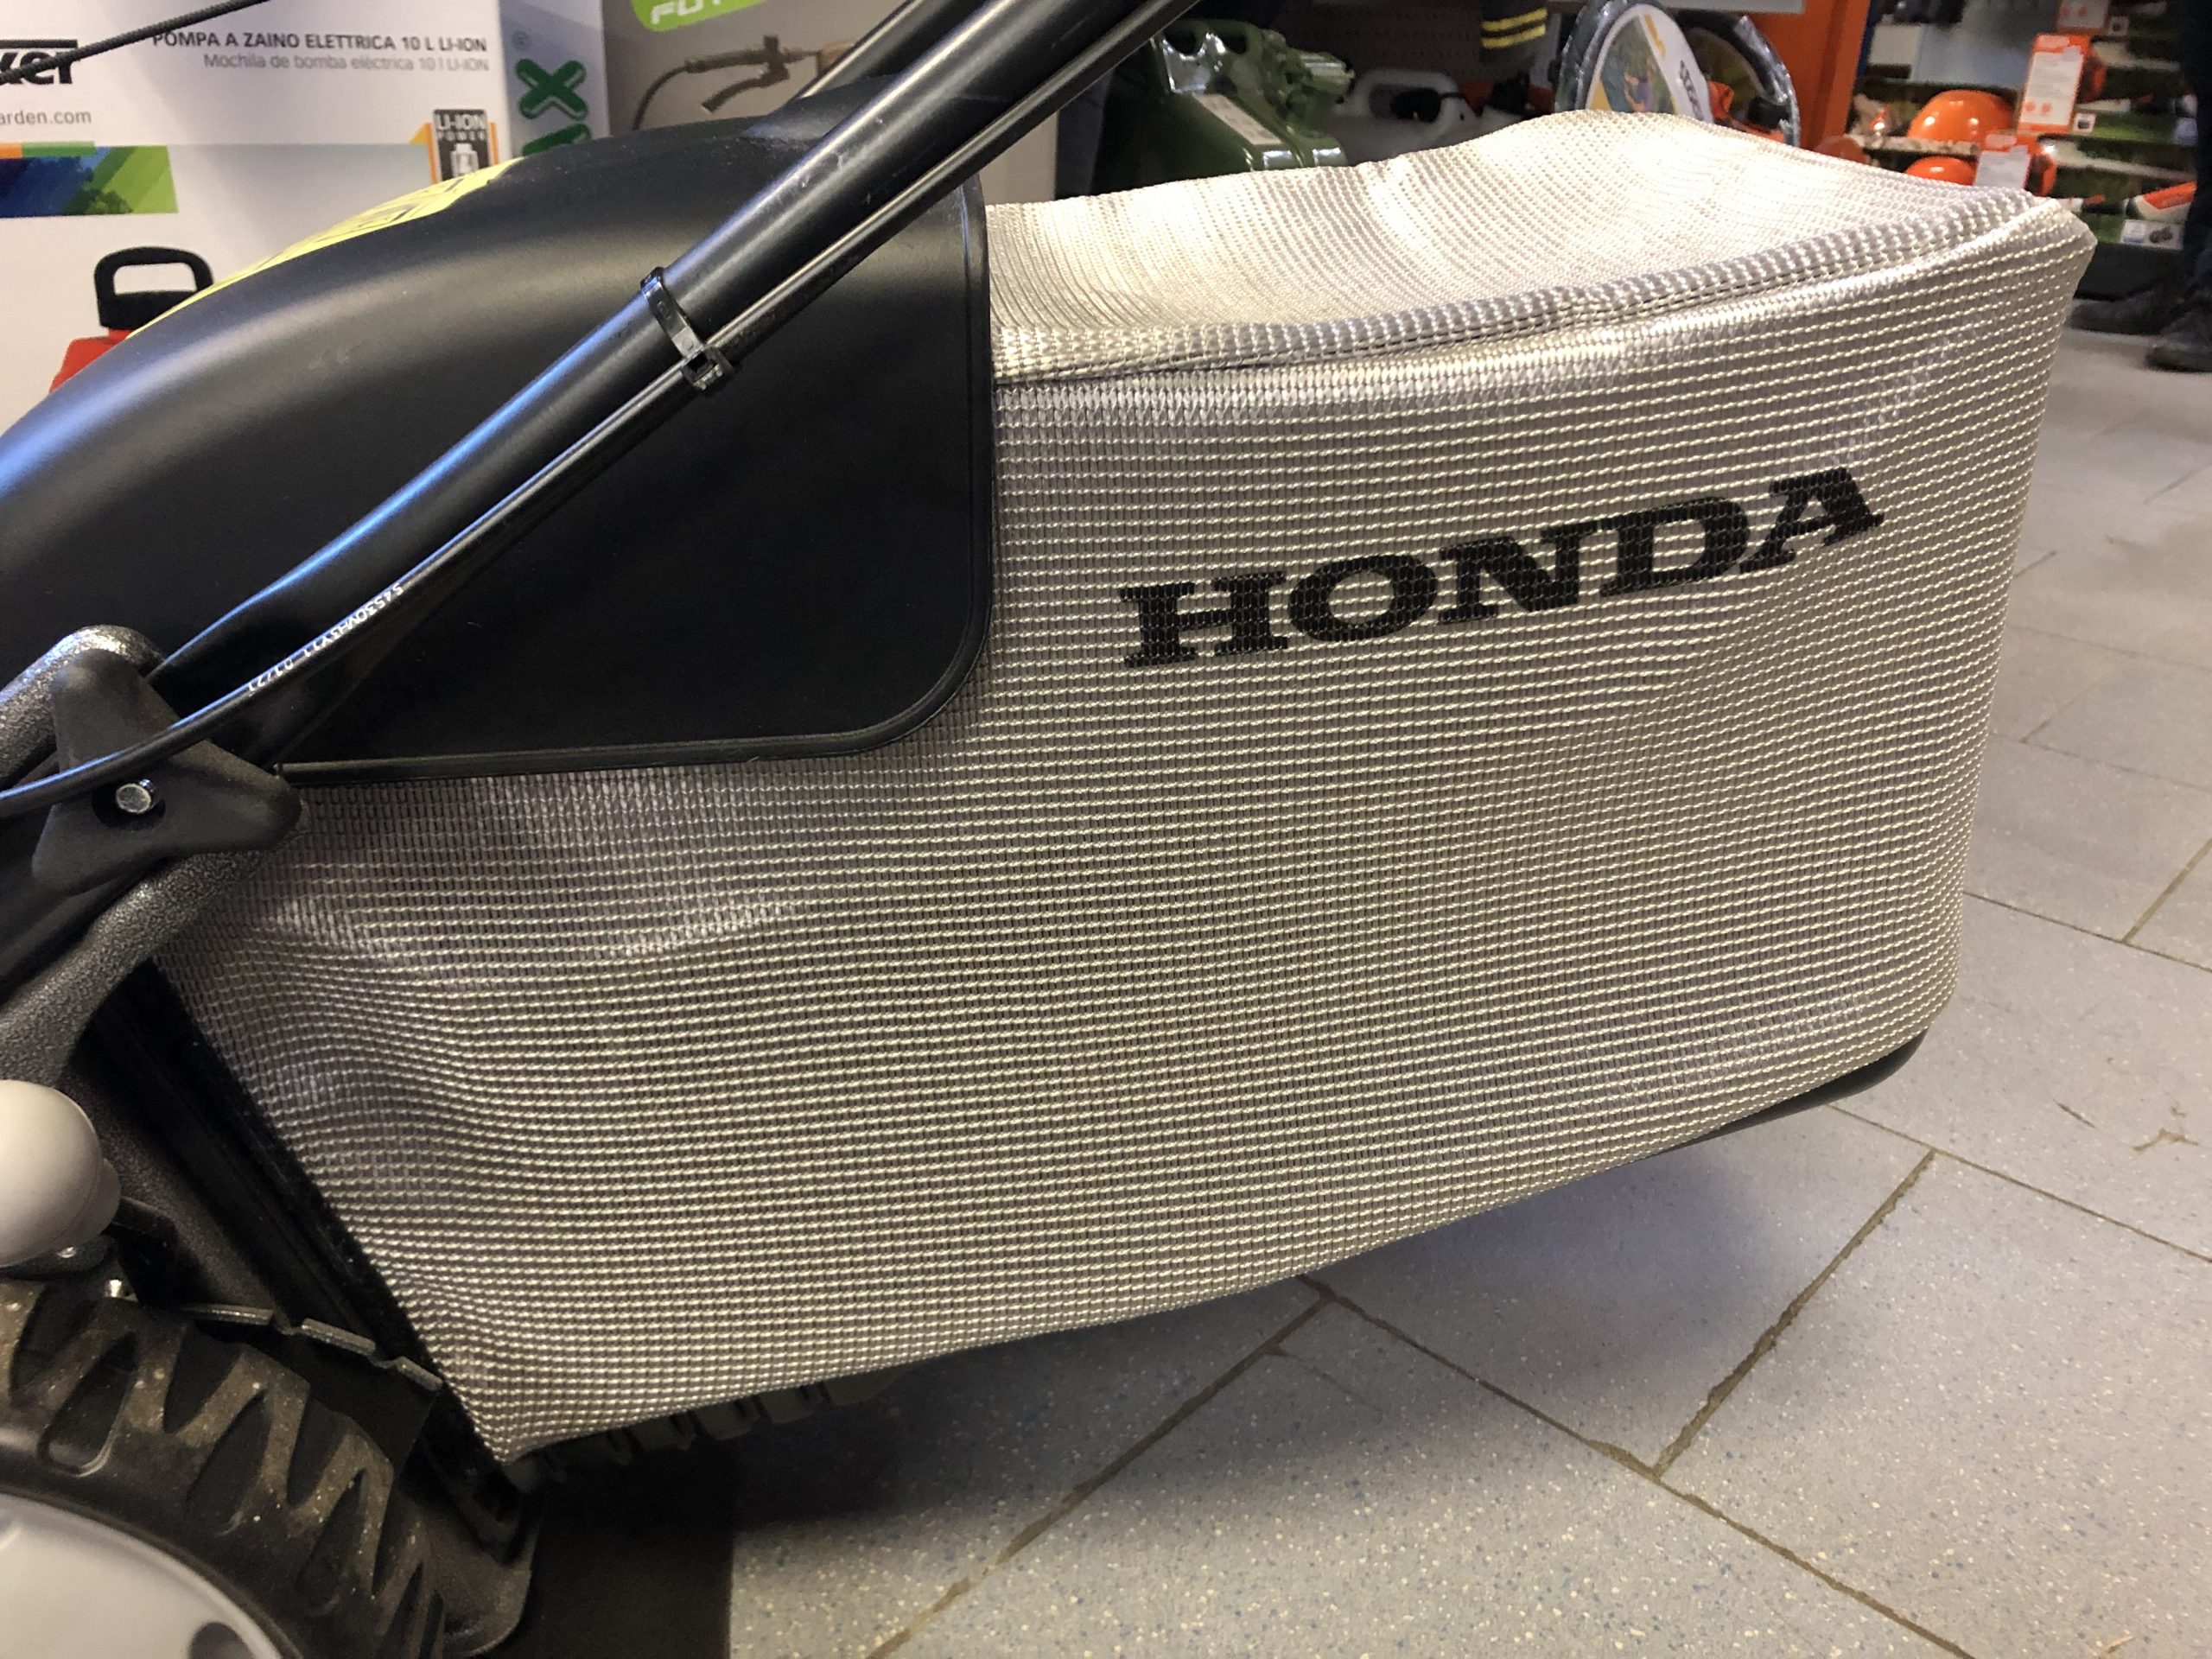 Tagliaerba Honda HRG466SK - alliastore